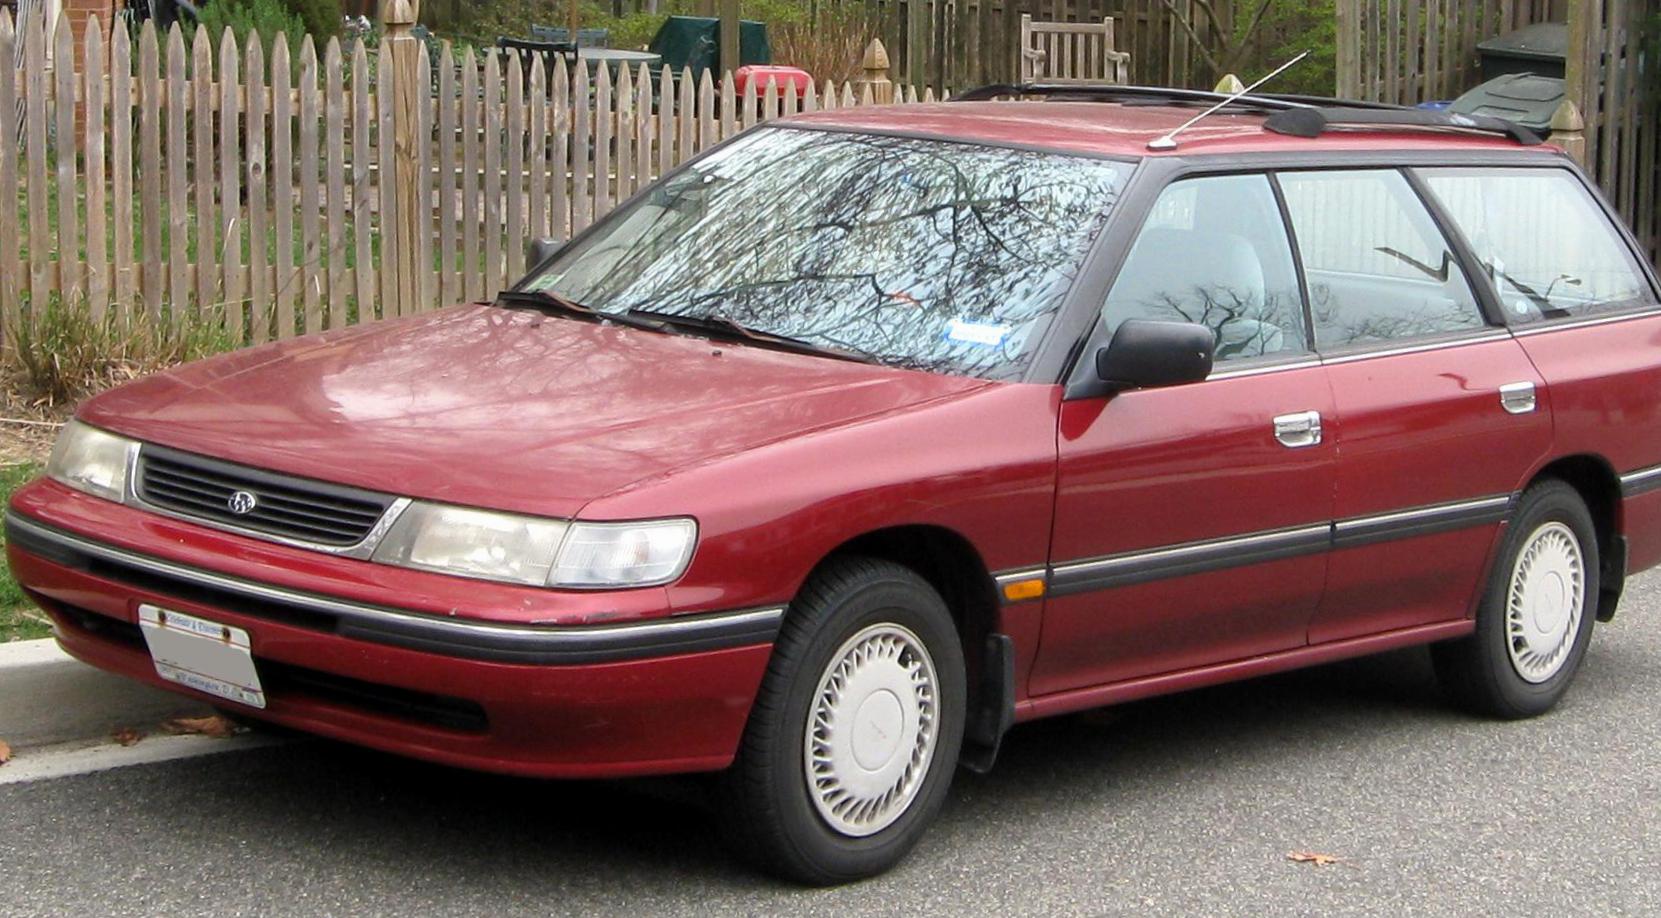 Legacy Wagon Subaru for sale wagon